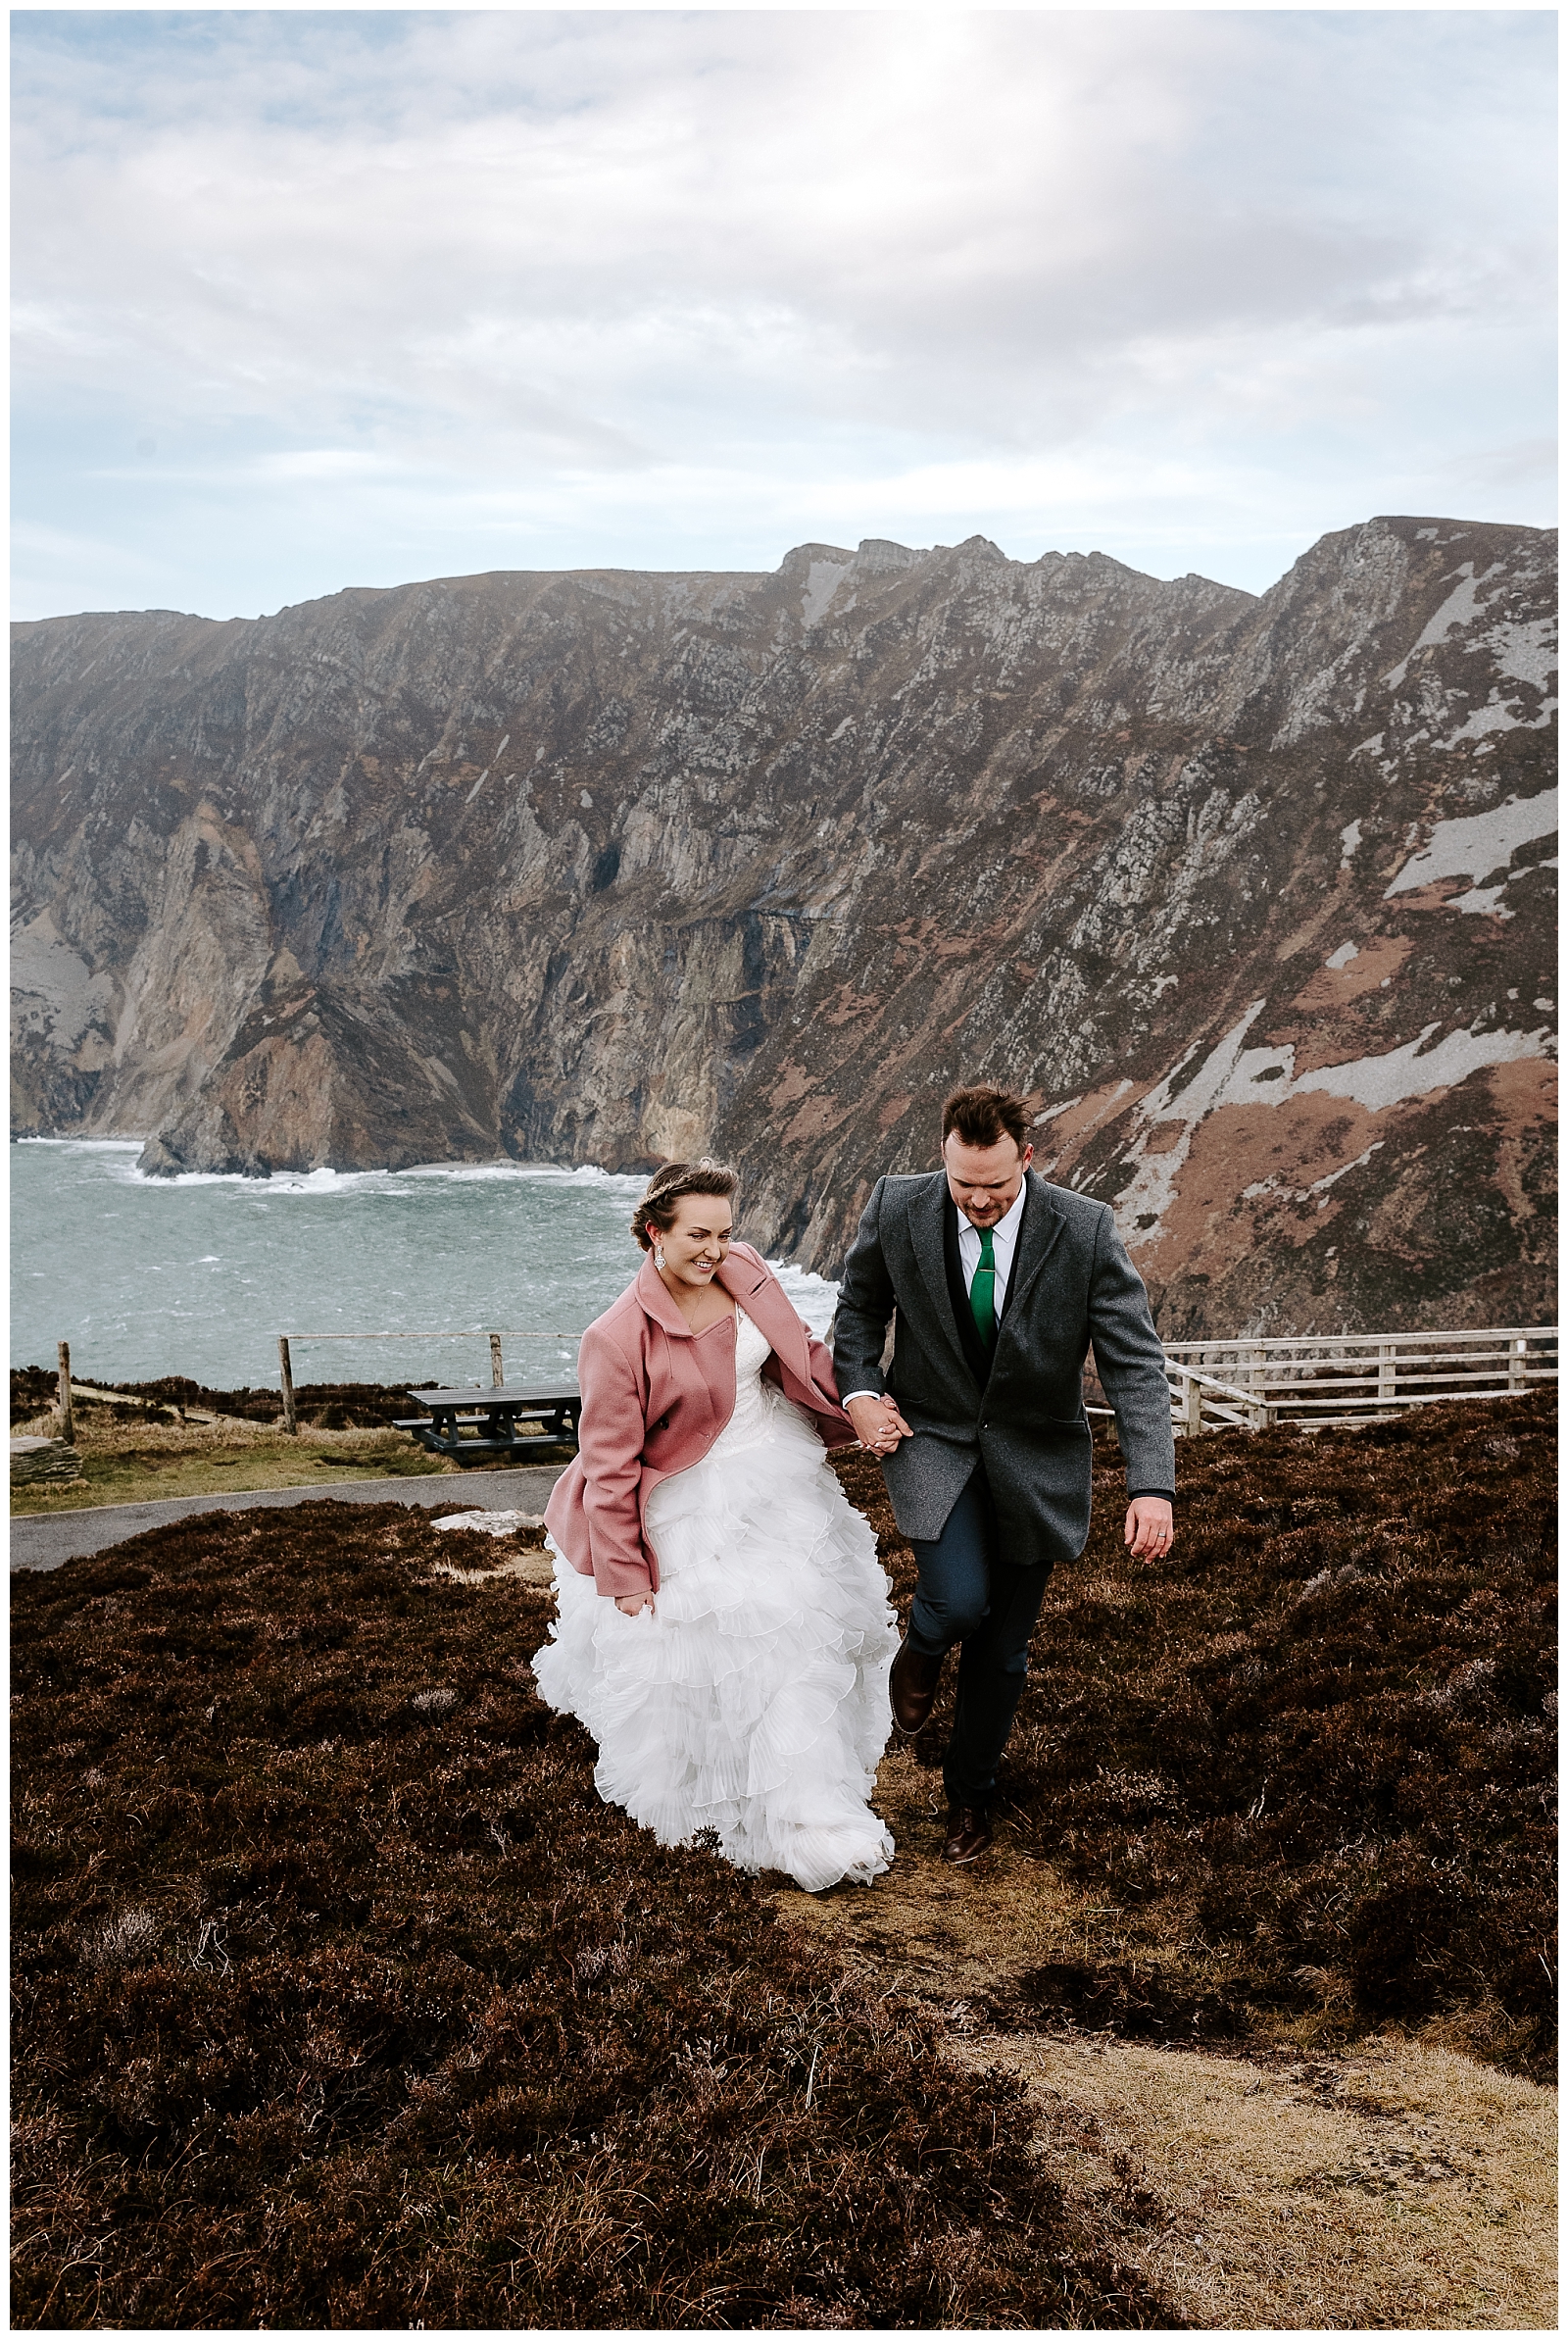 Couple celebrates their elopement in Ireland